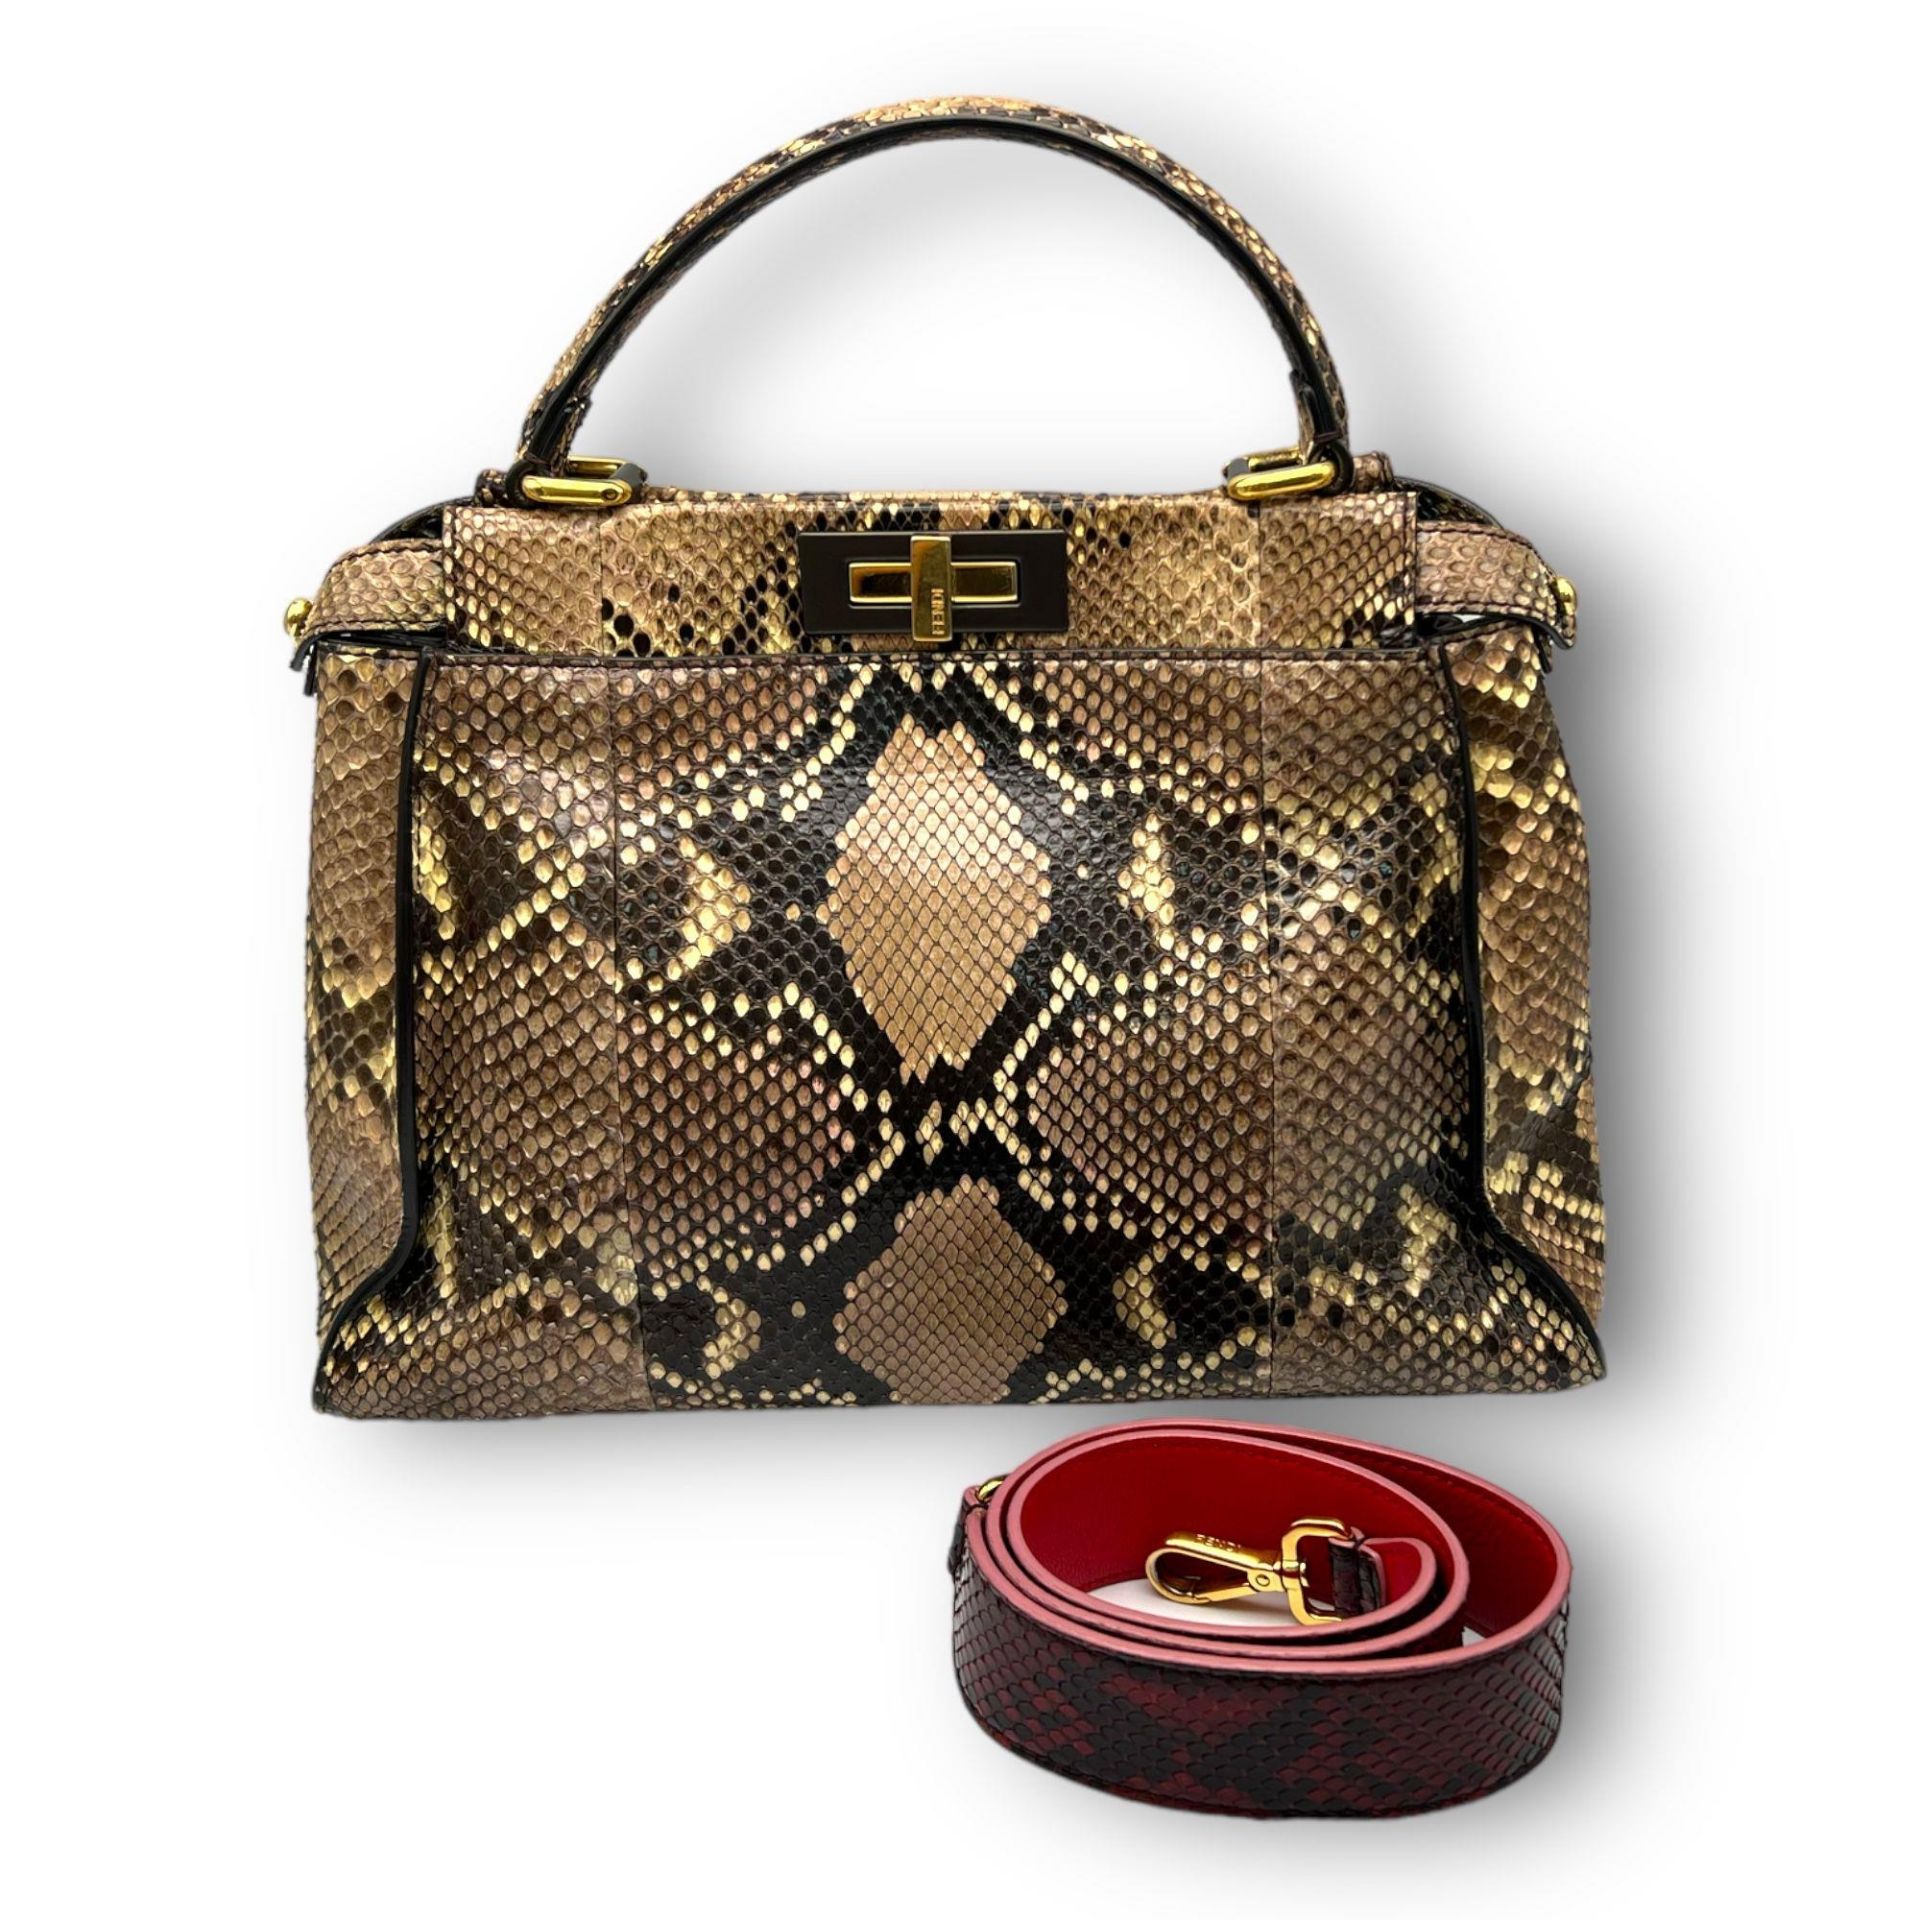 A Fendi Python Leather Hand/Shoulder bag. Attachable shoulder strap. Gold-tone hardware. Textile and